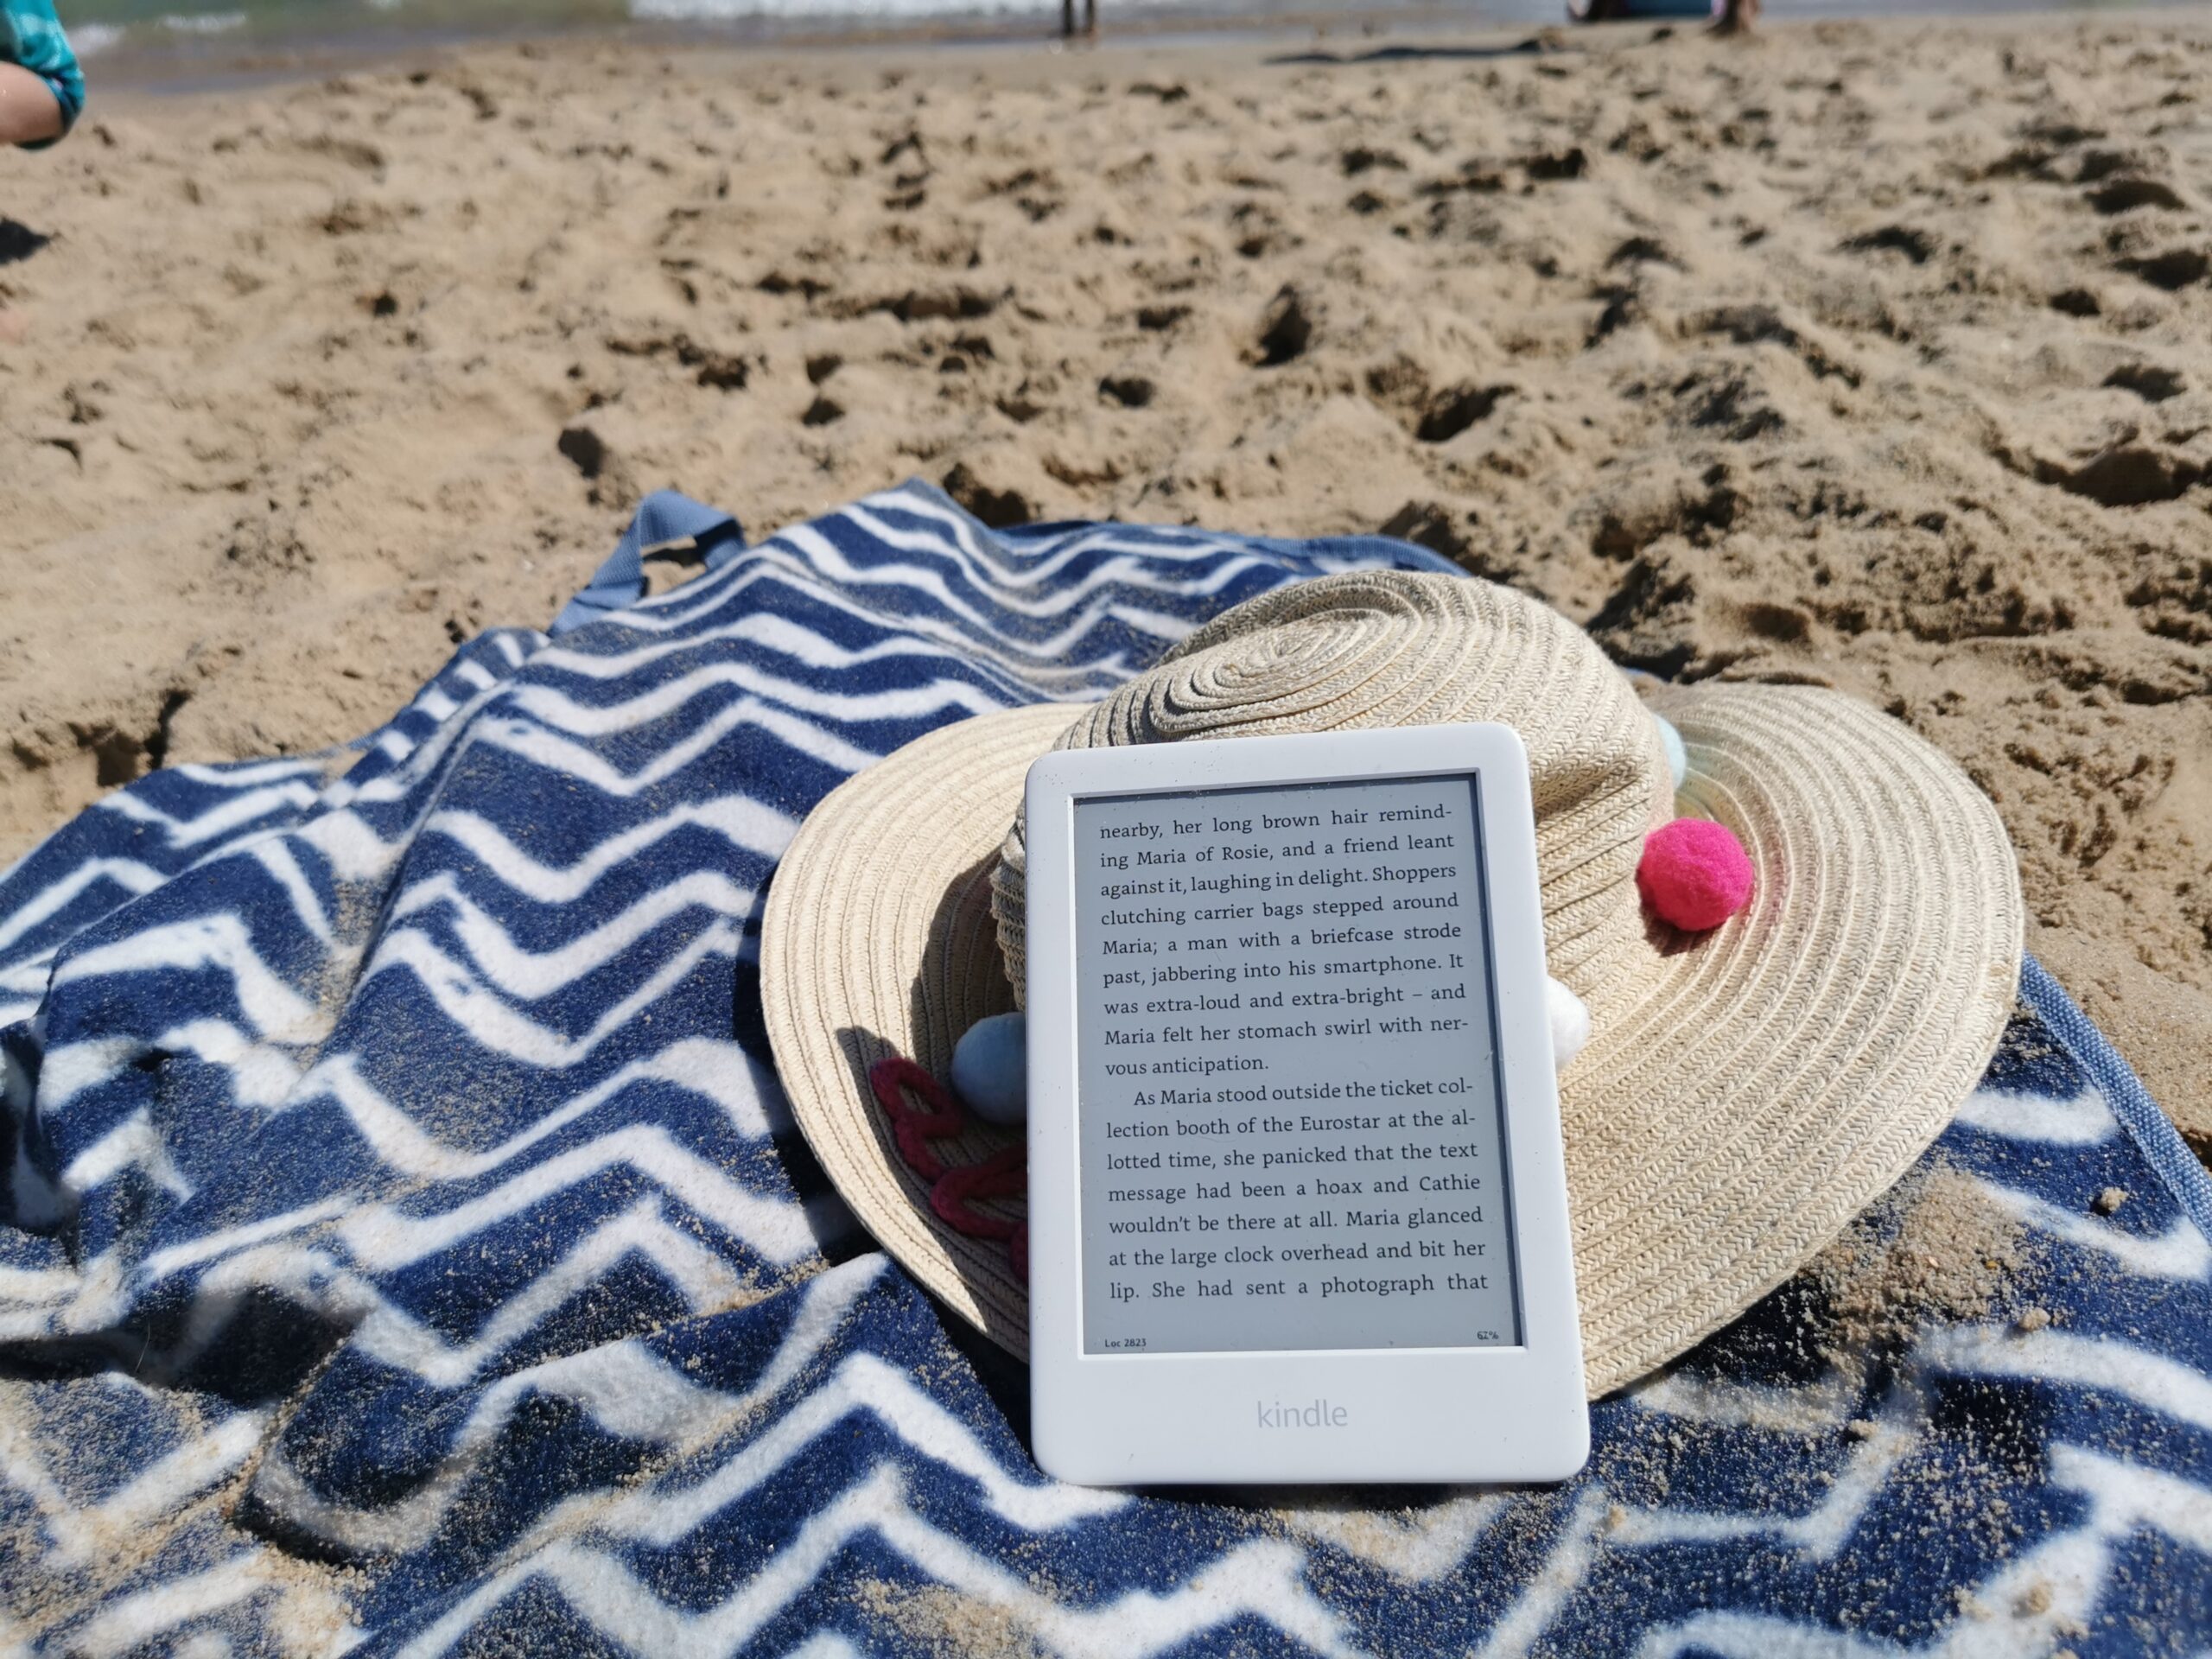 kindle reader on beach